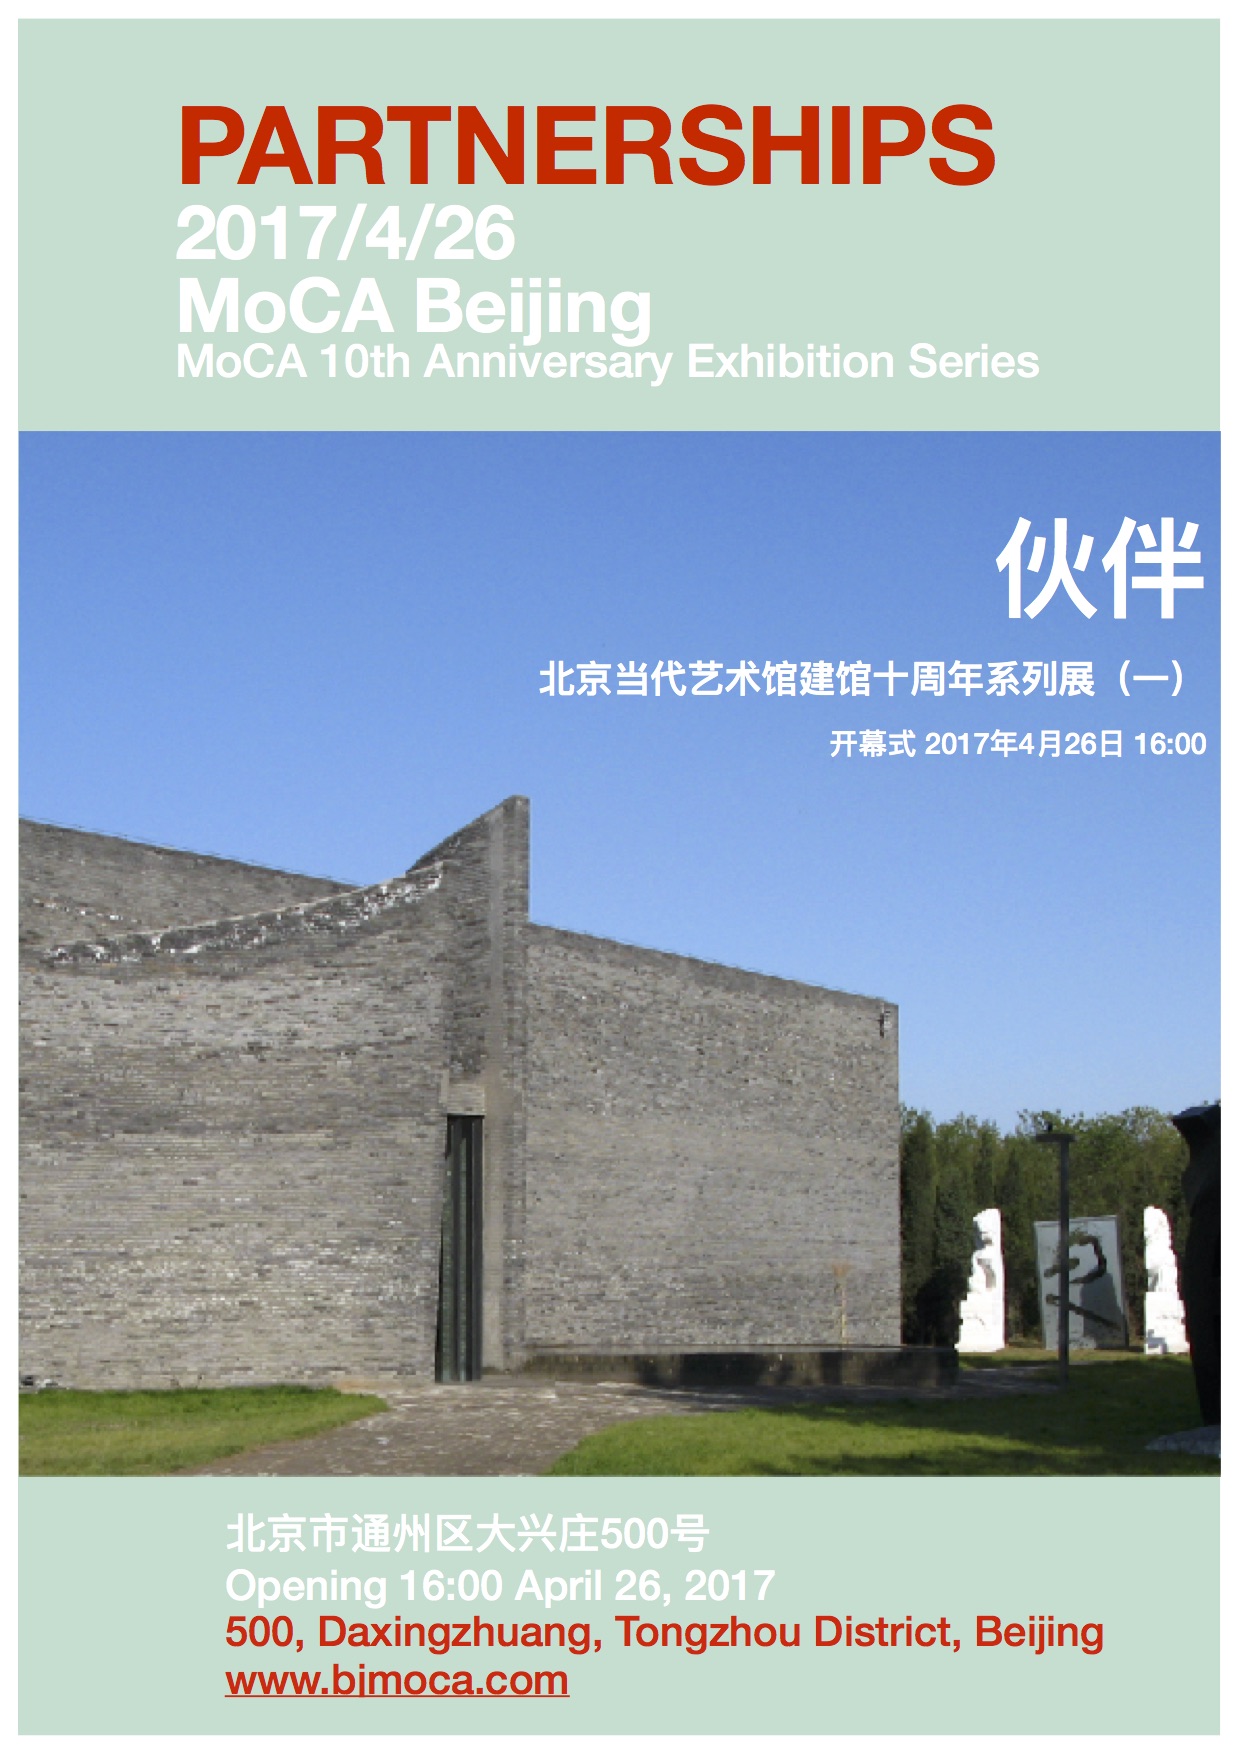 Partnerships - MoCA 10th Anniversary Exhibition Series (1)